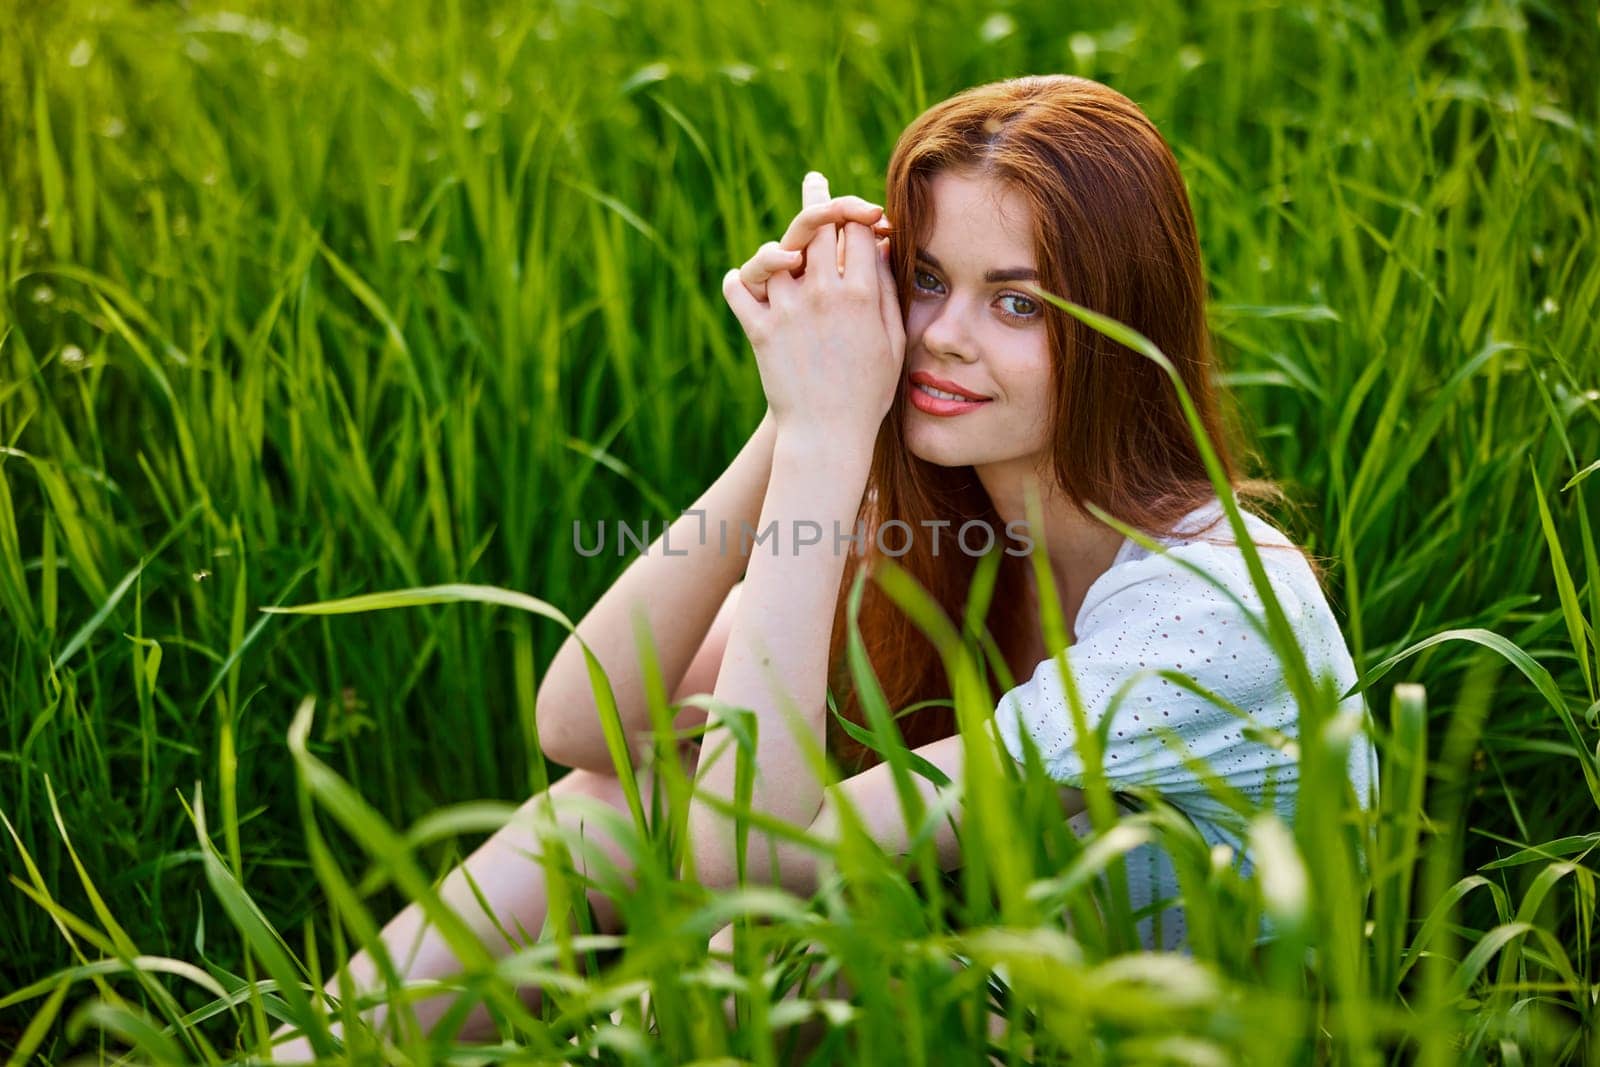 cute woman in summer high grass sits in a light dress by Vichizh